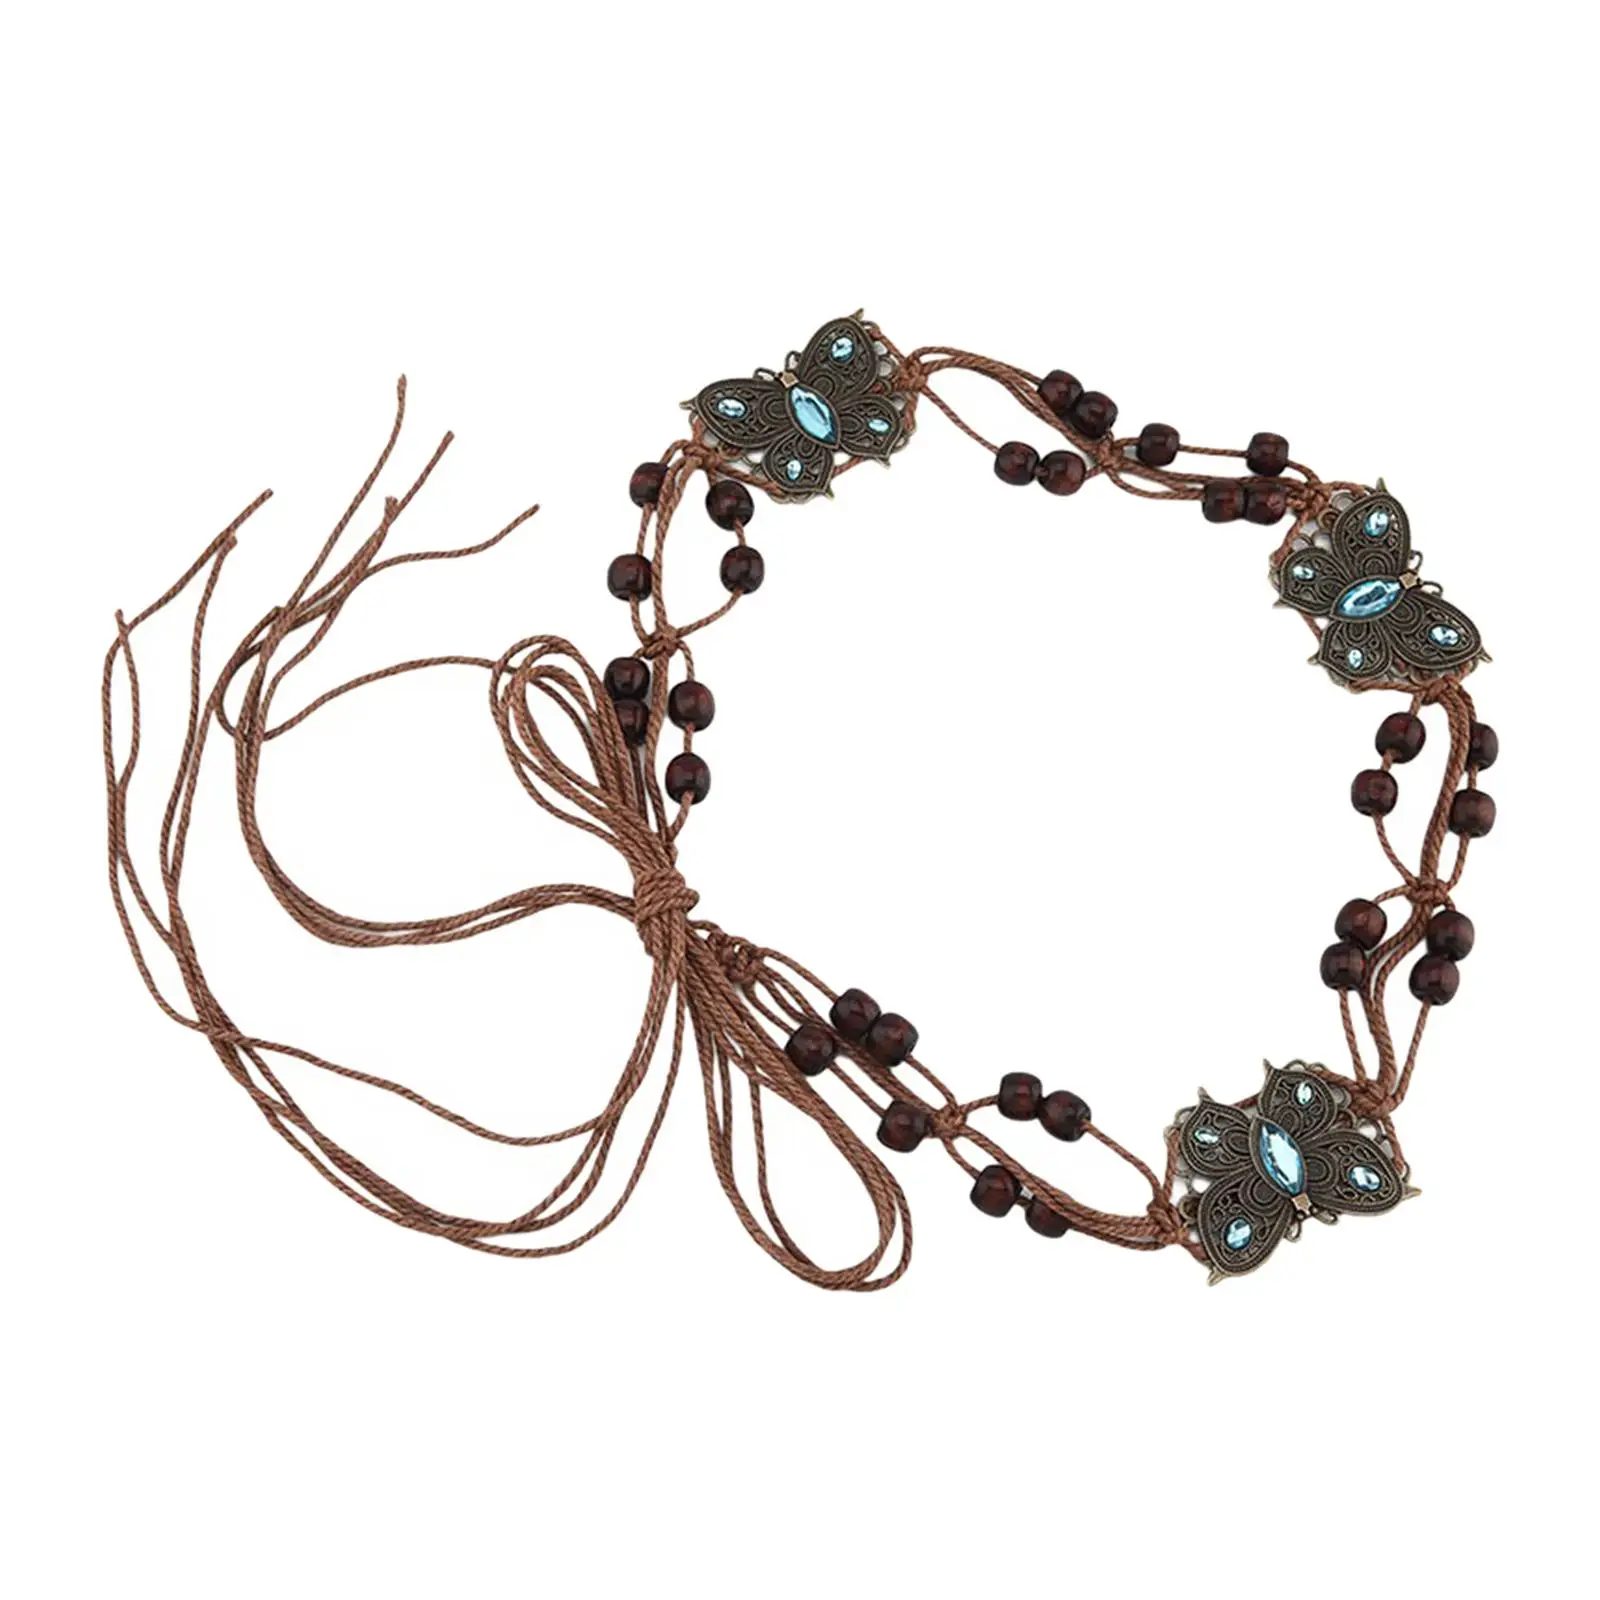 Boho Belt Adjustable Decorative Belt Ladies Skinny Belt Waistband Casual Wooden Beads Woven Waist Belts for Coats Dresses